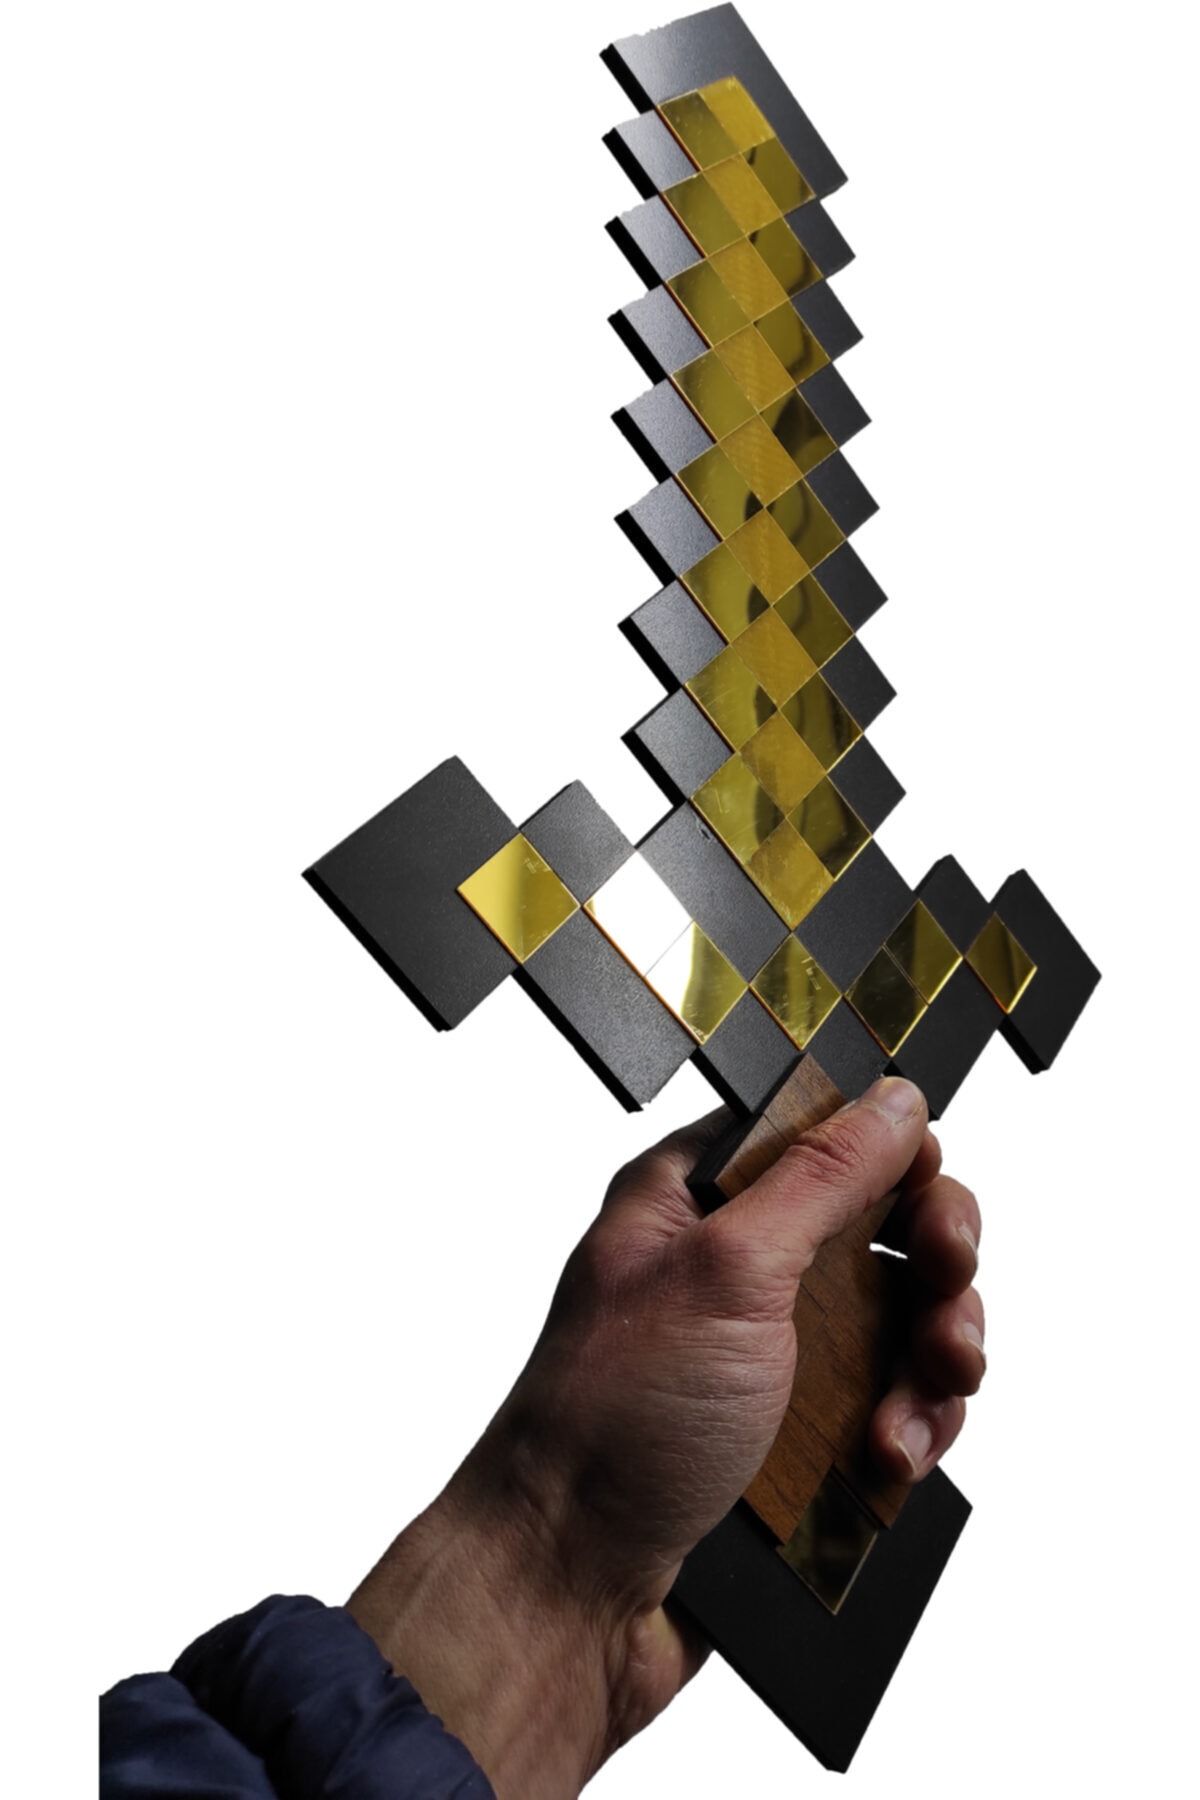 Payitaht Tablo Minecraft Altın Kılıç Ahşap Oyuncak, Minecraft Oyuncağı